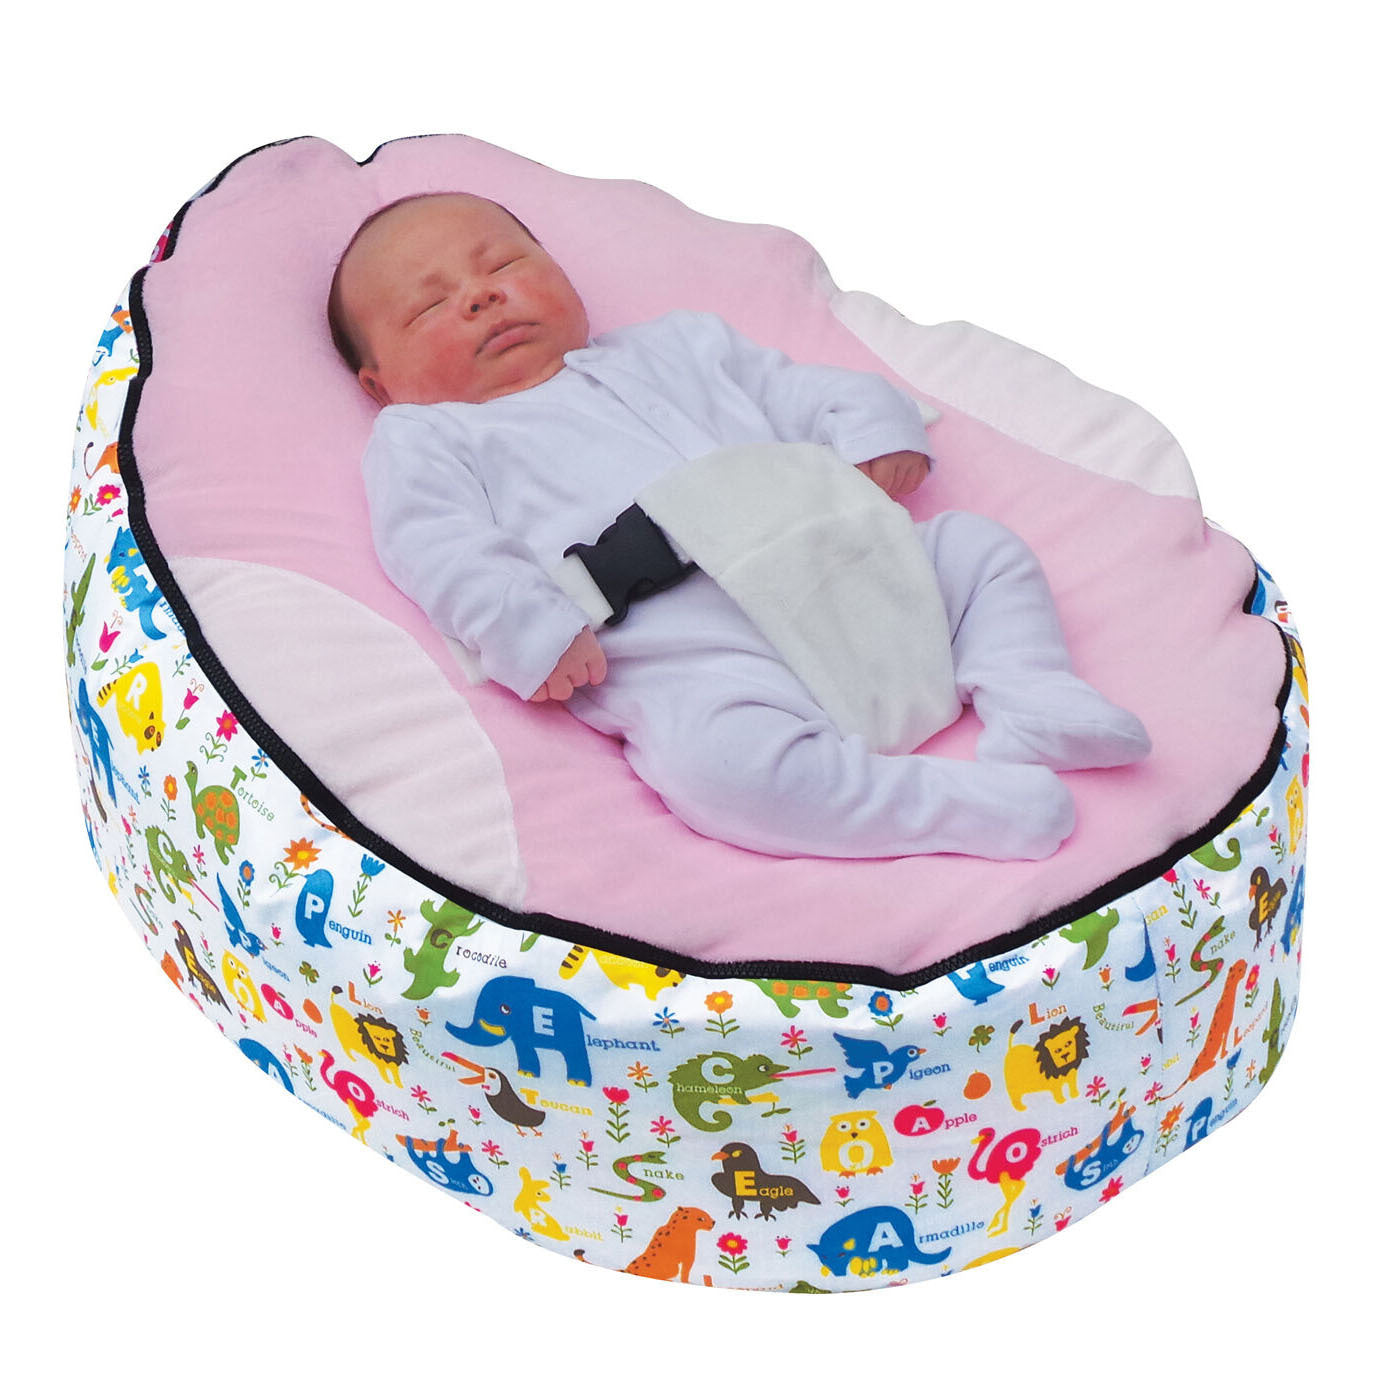 Baby Bed Lazy Sofa Bean Bag Chair